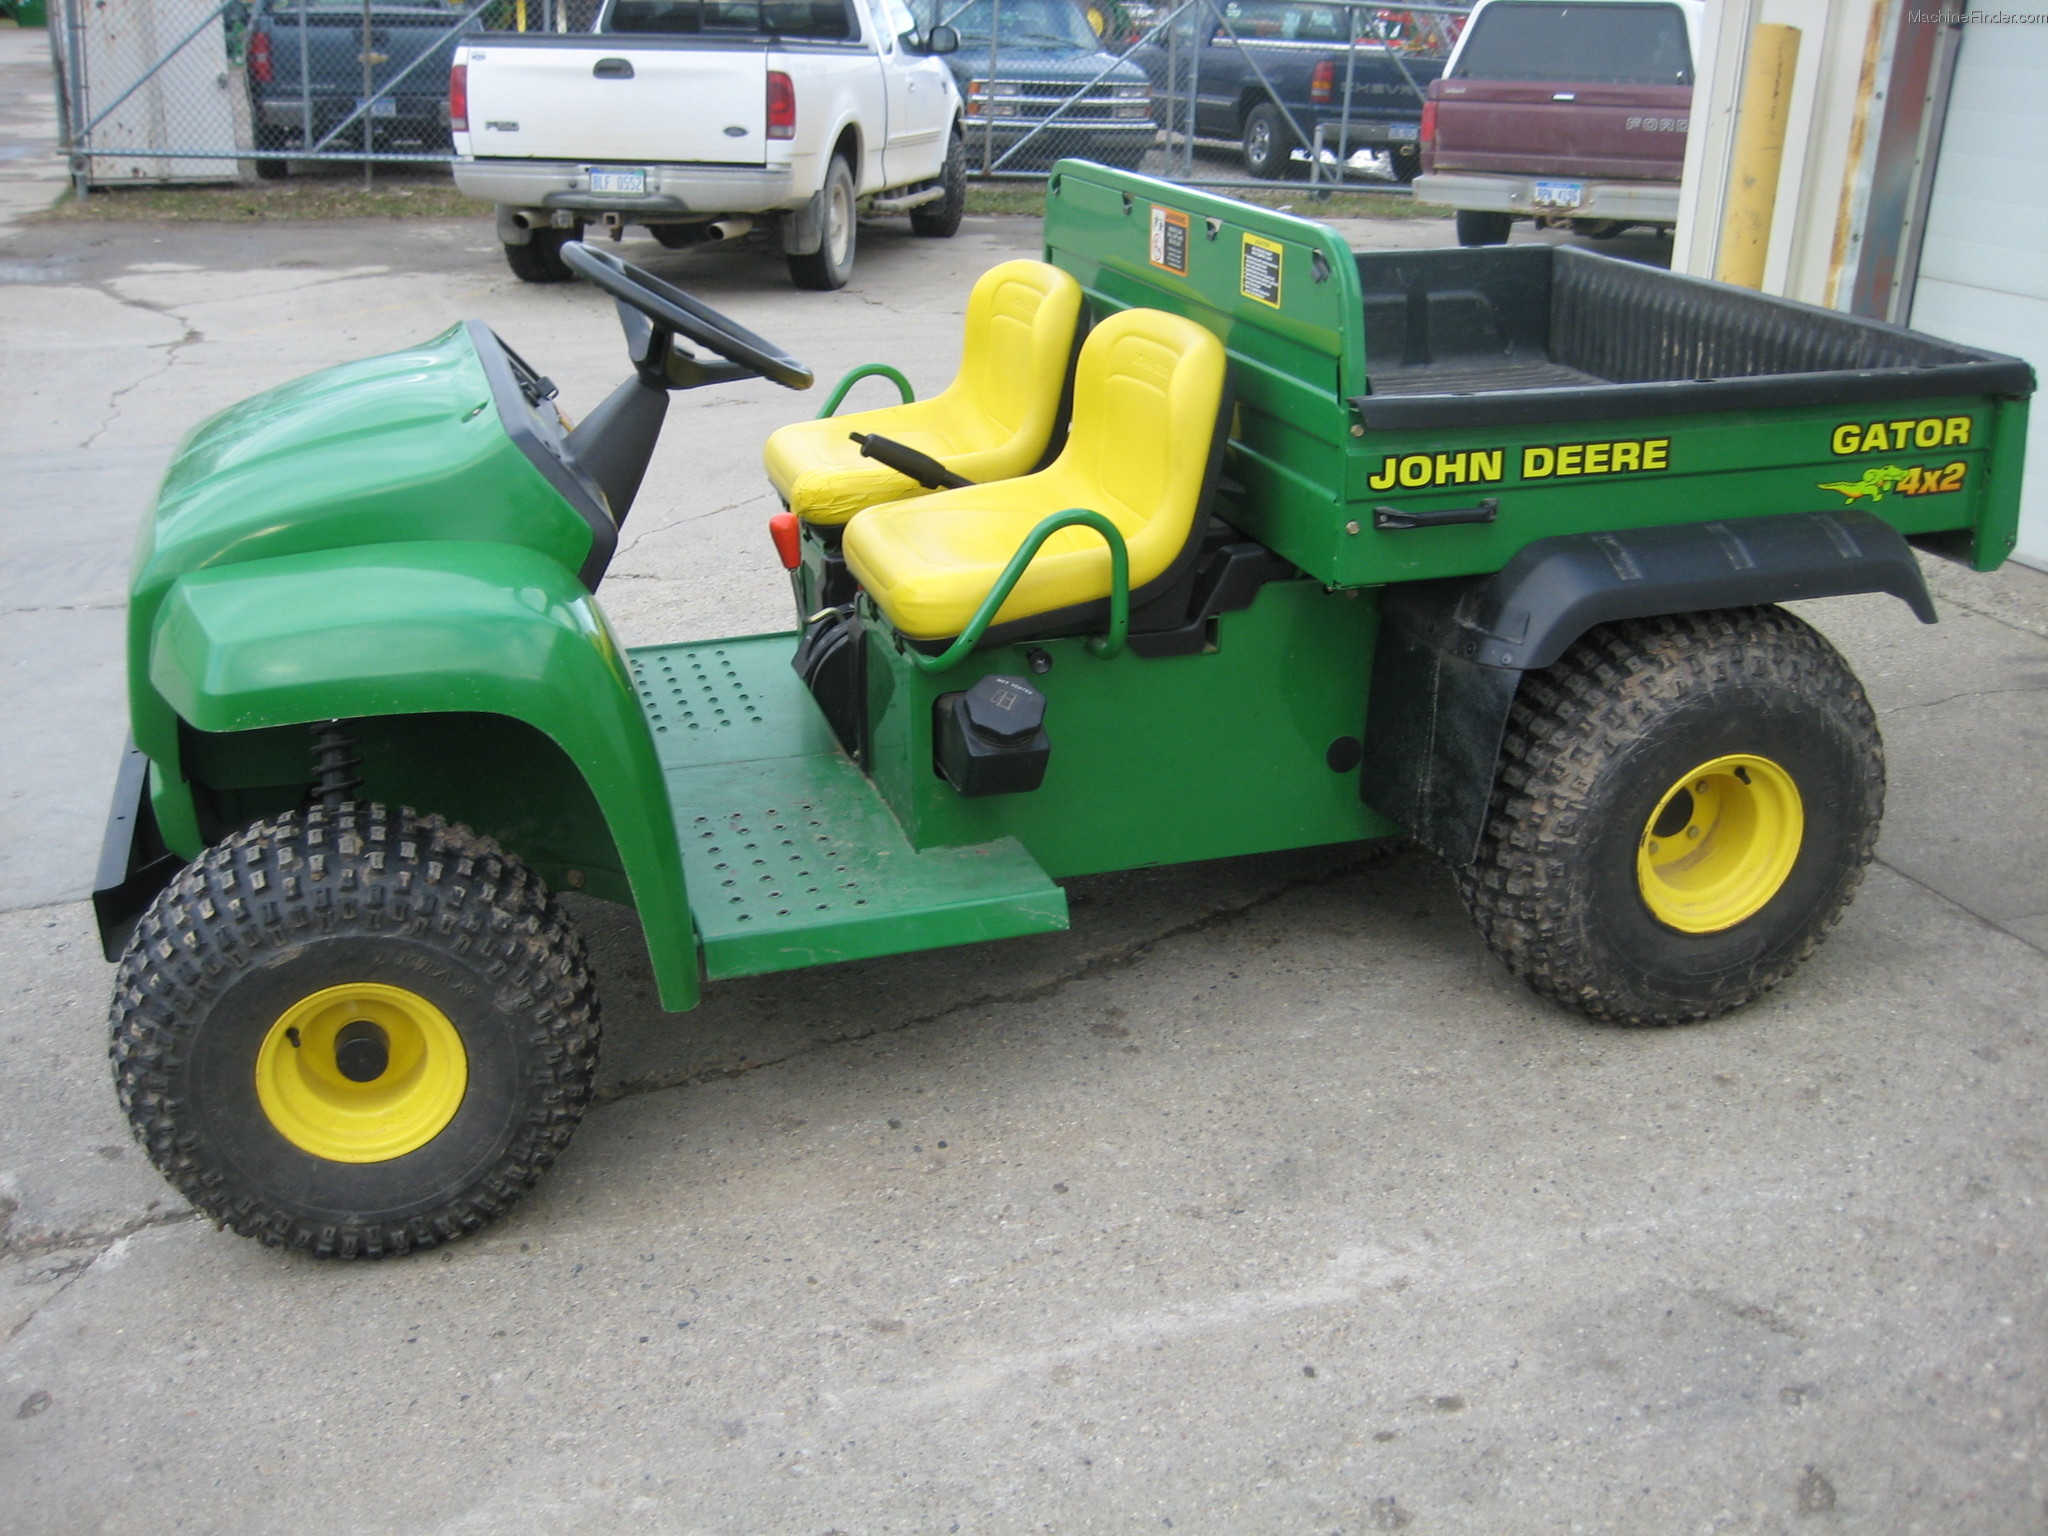 2000 John Deere 4X2 ATV's and Gators - John Deere MachineFinder